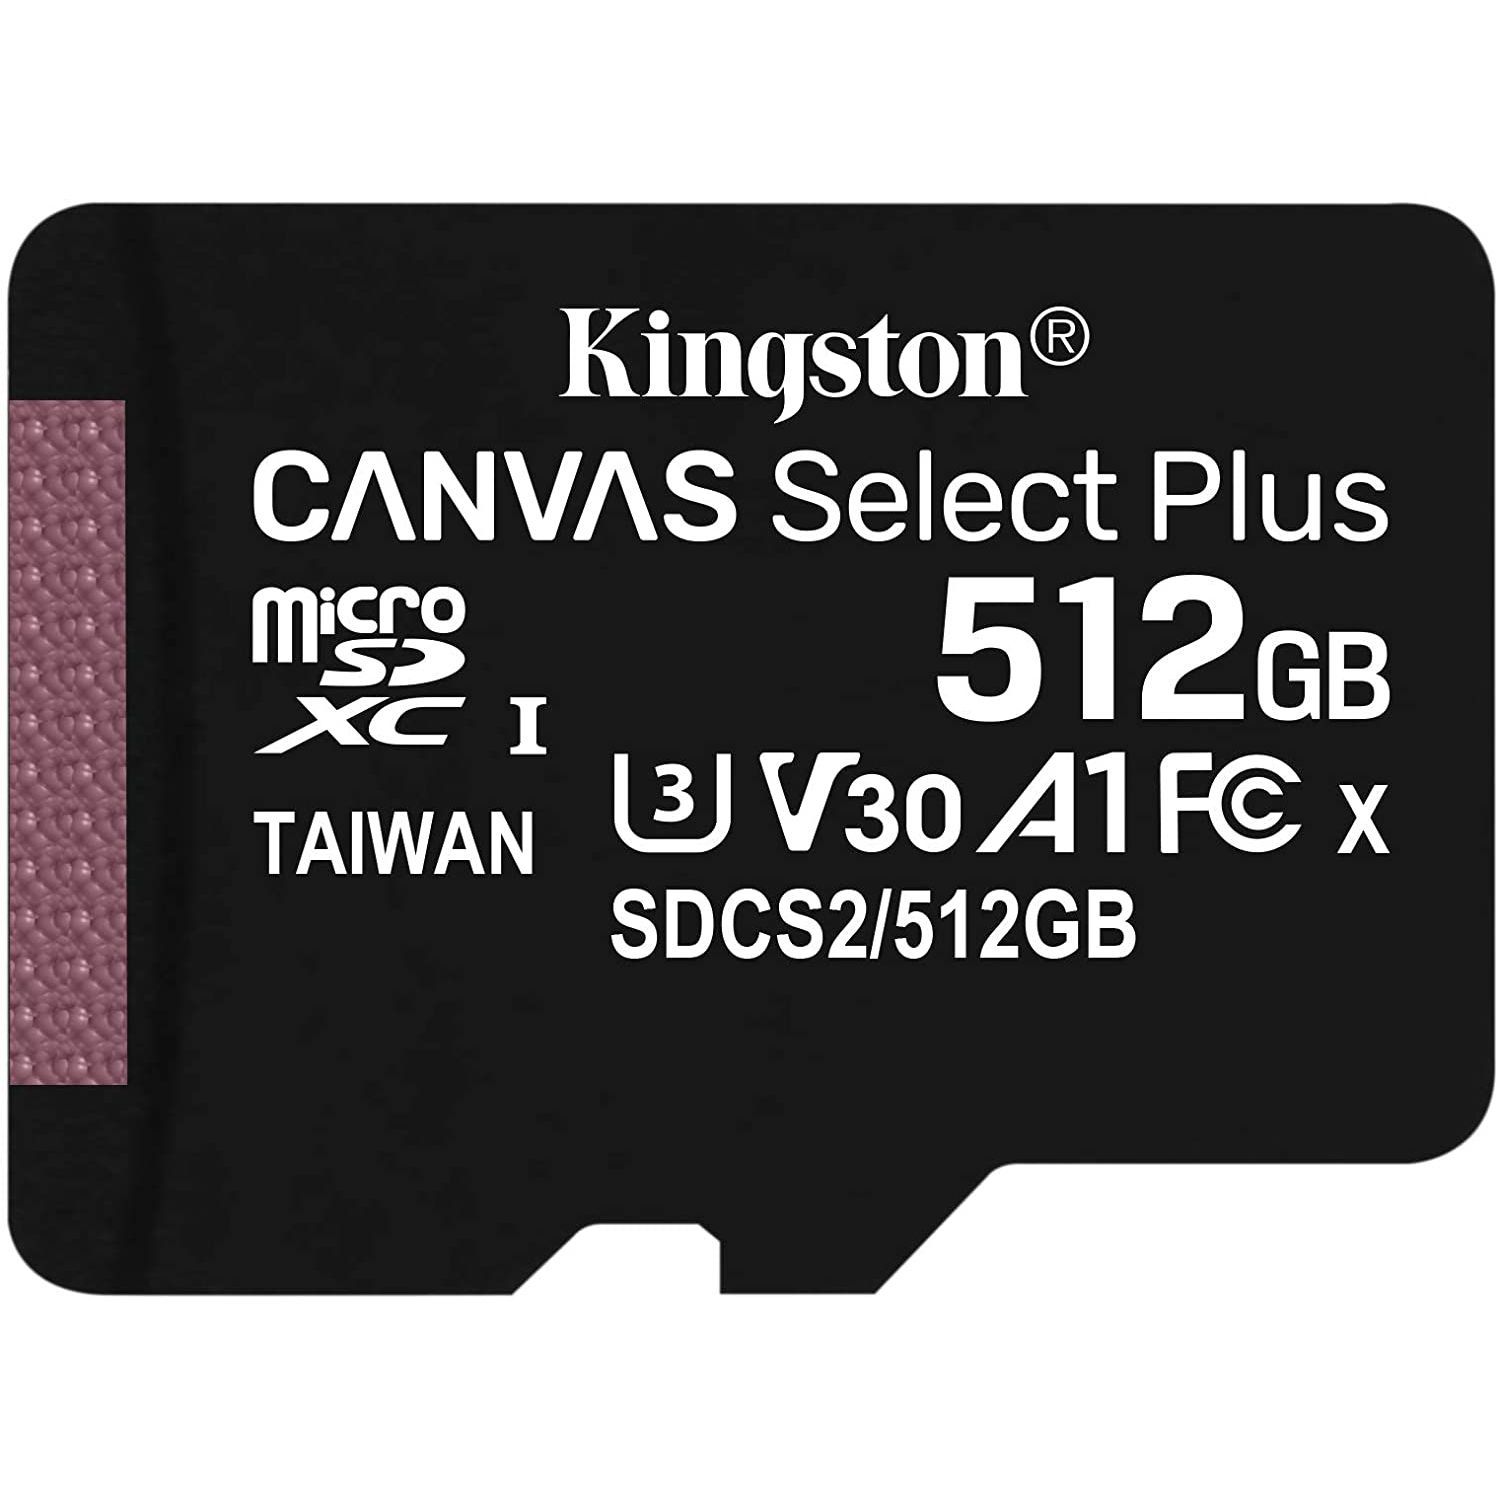 02 Kingston Canvas Select Plus